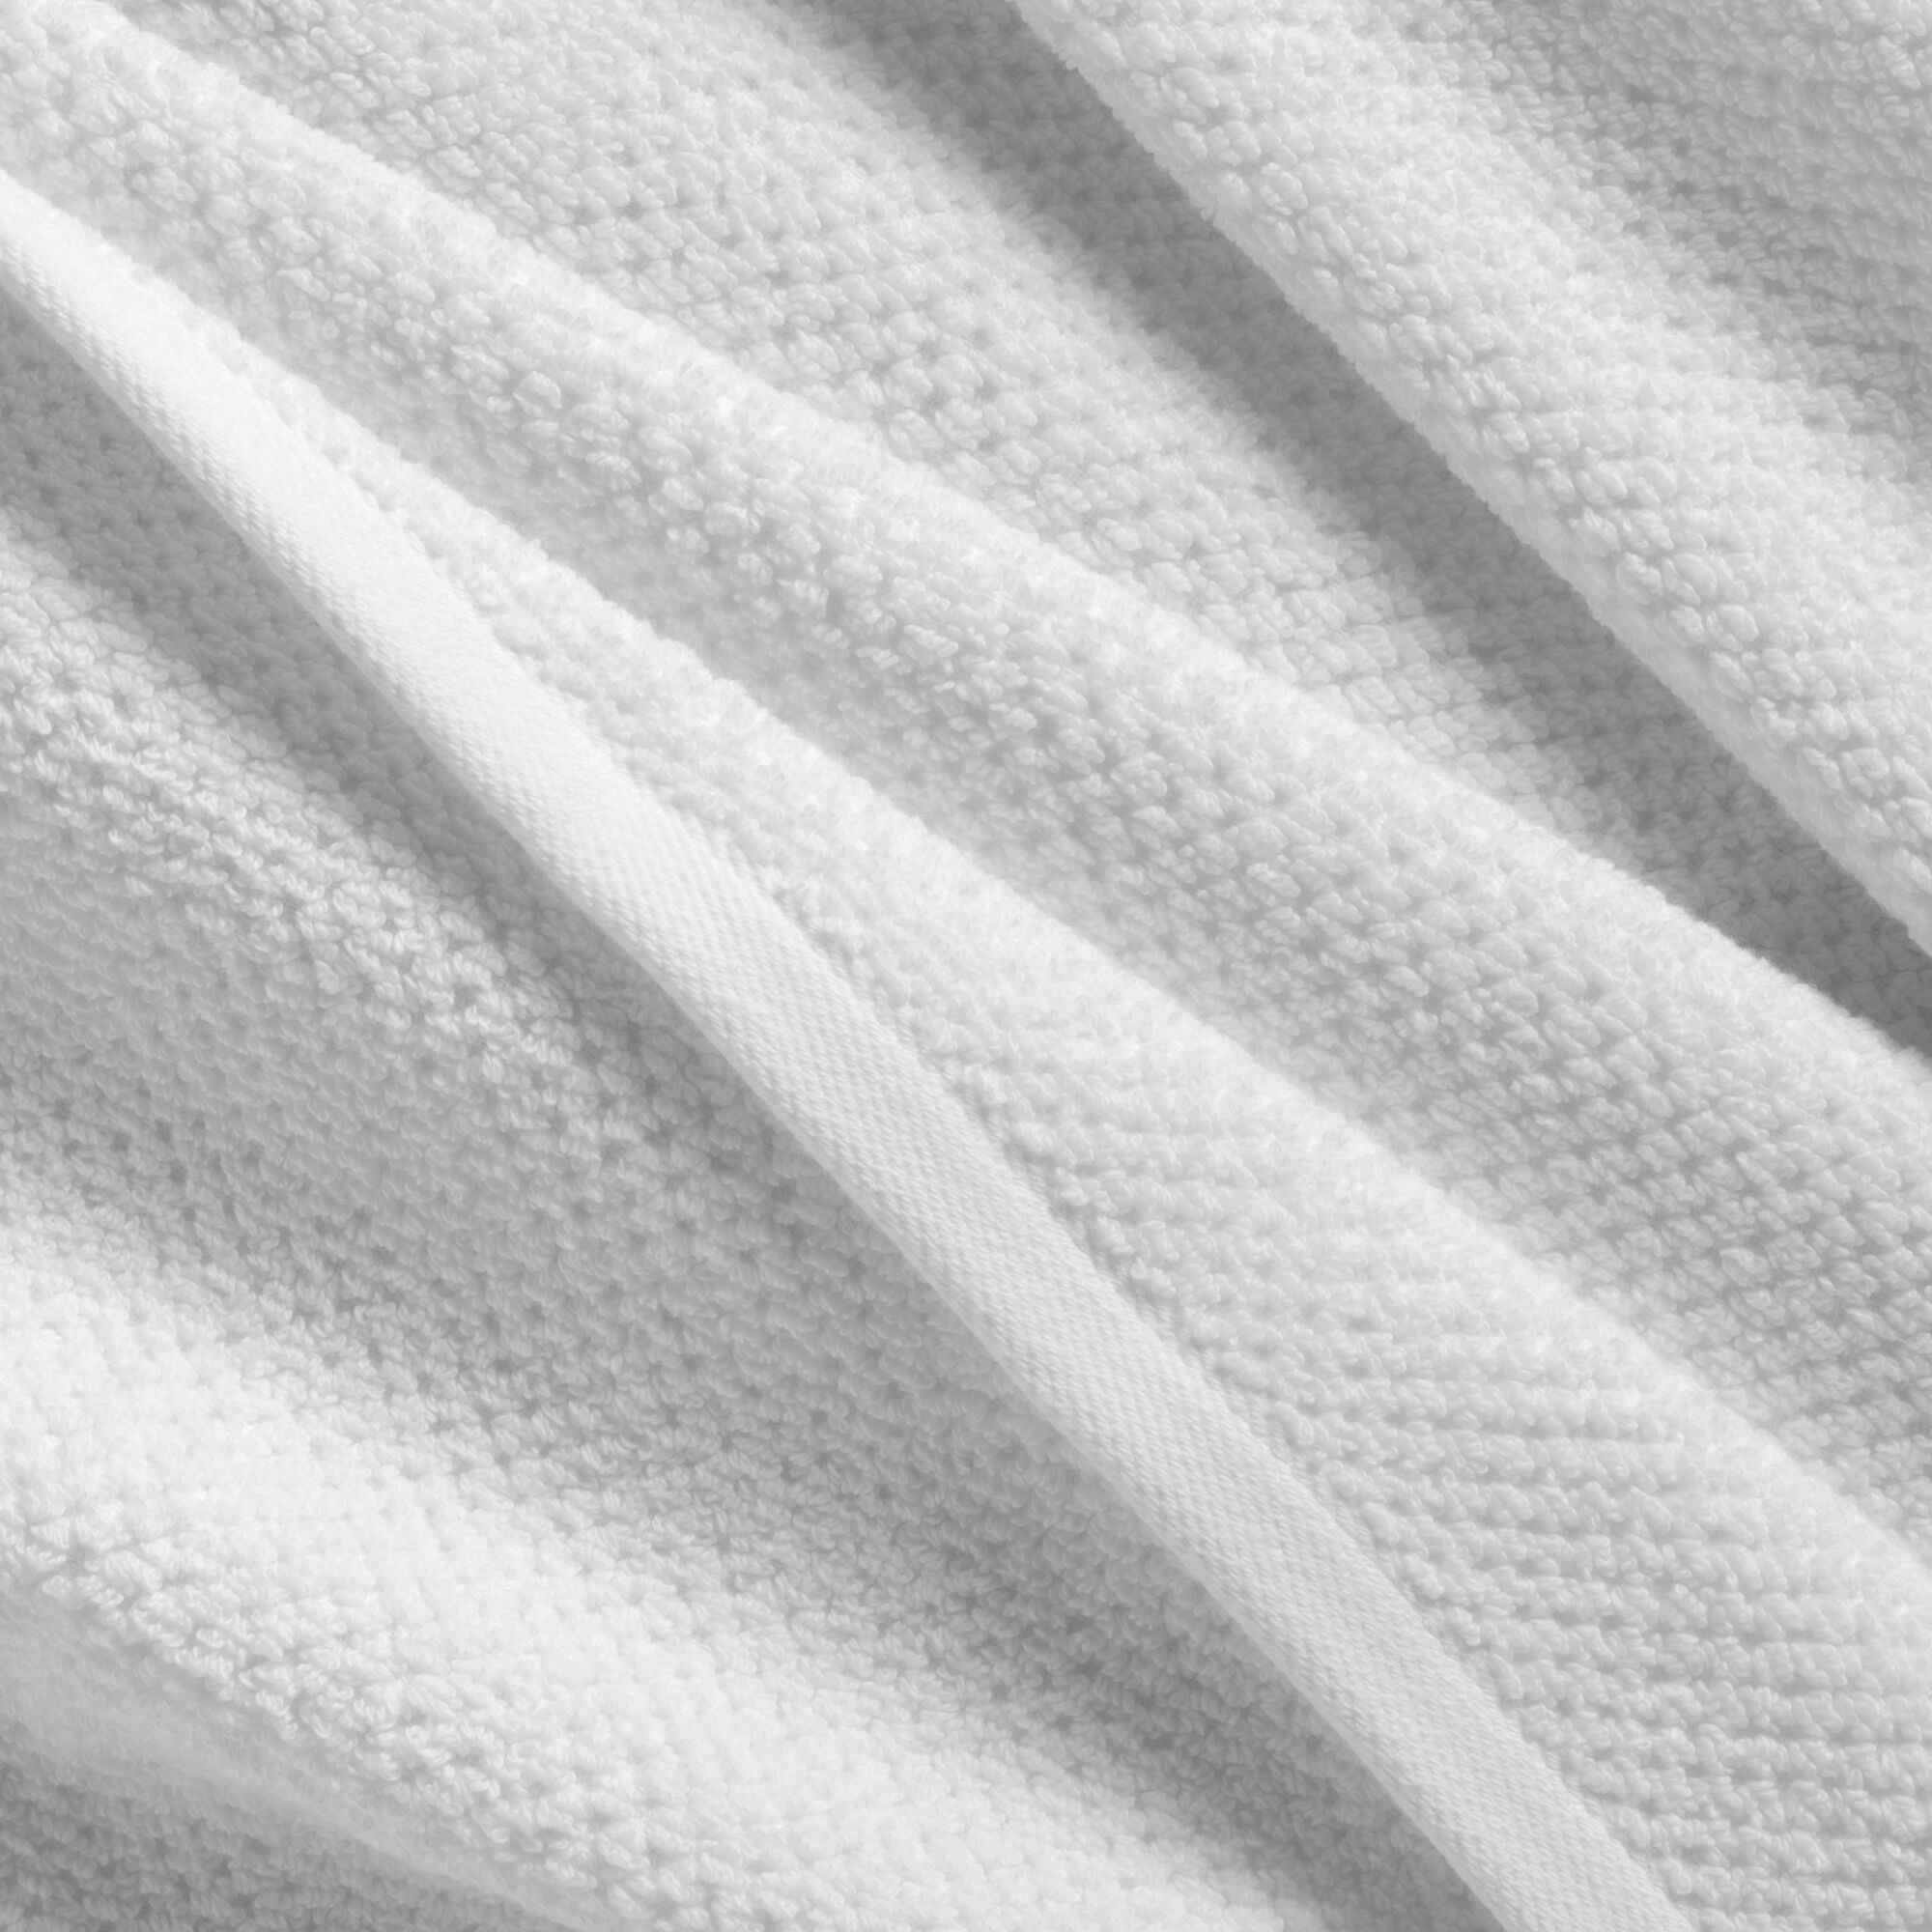 Blomus Riva Organic Terry Cloth Washcloth Set of 4 White 66297 – LoftModern